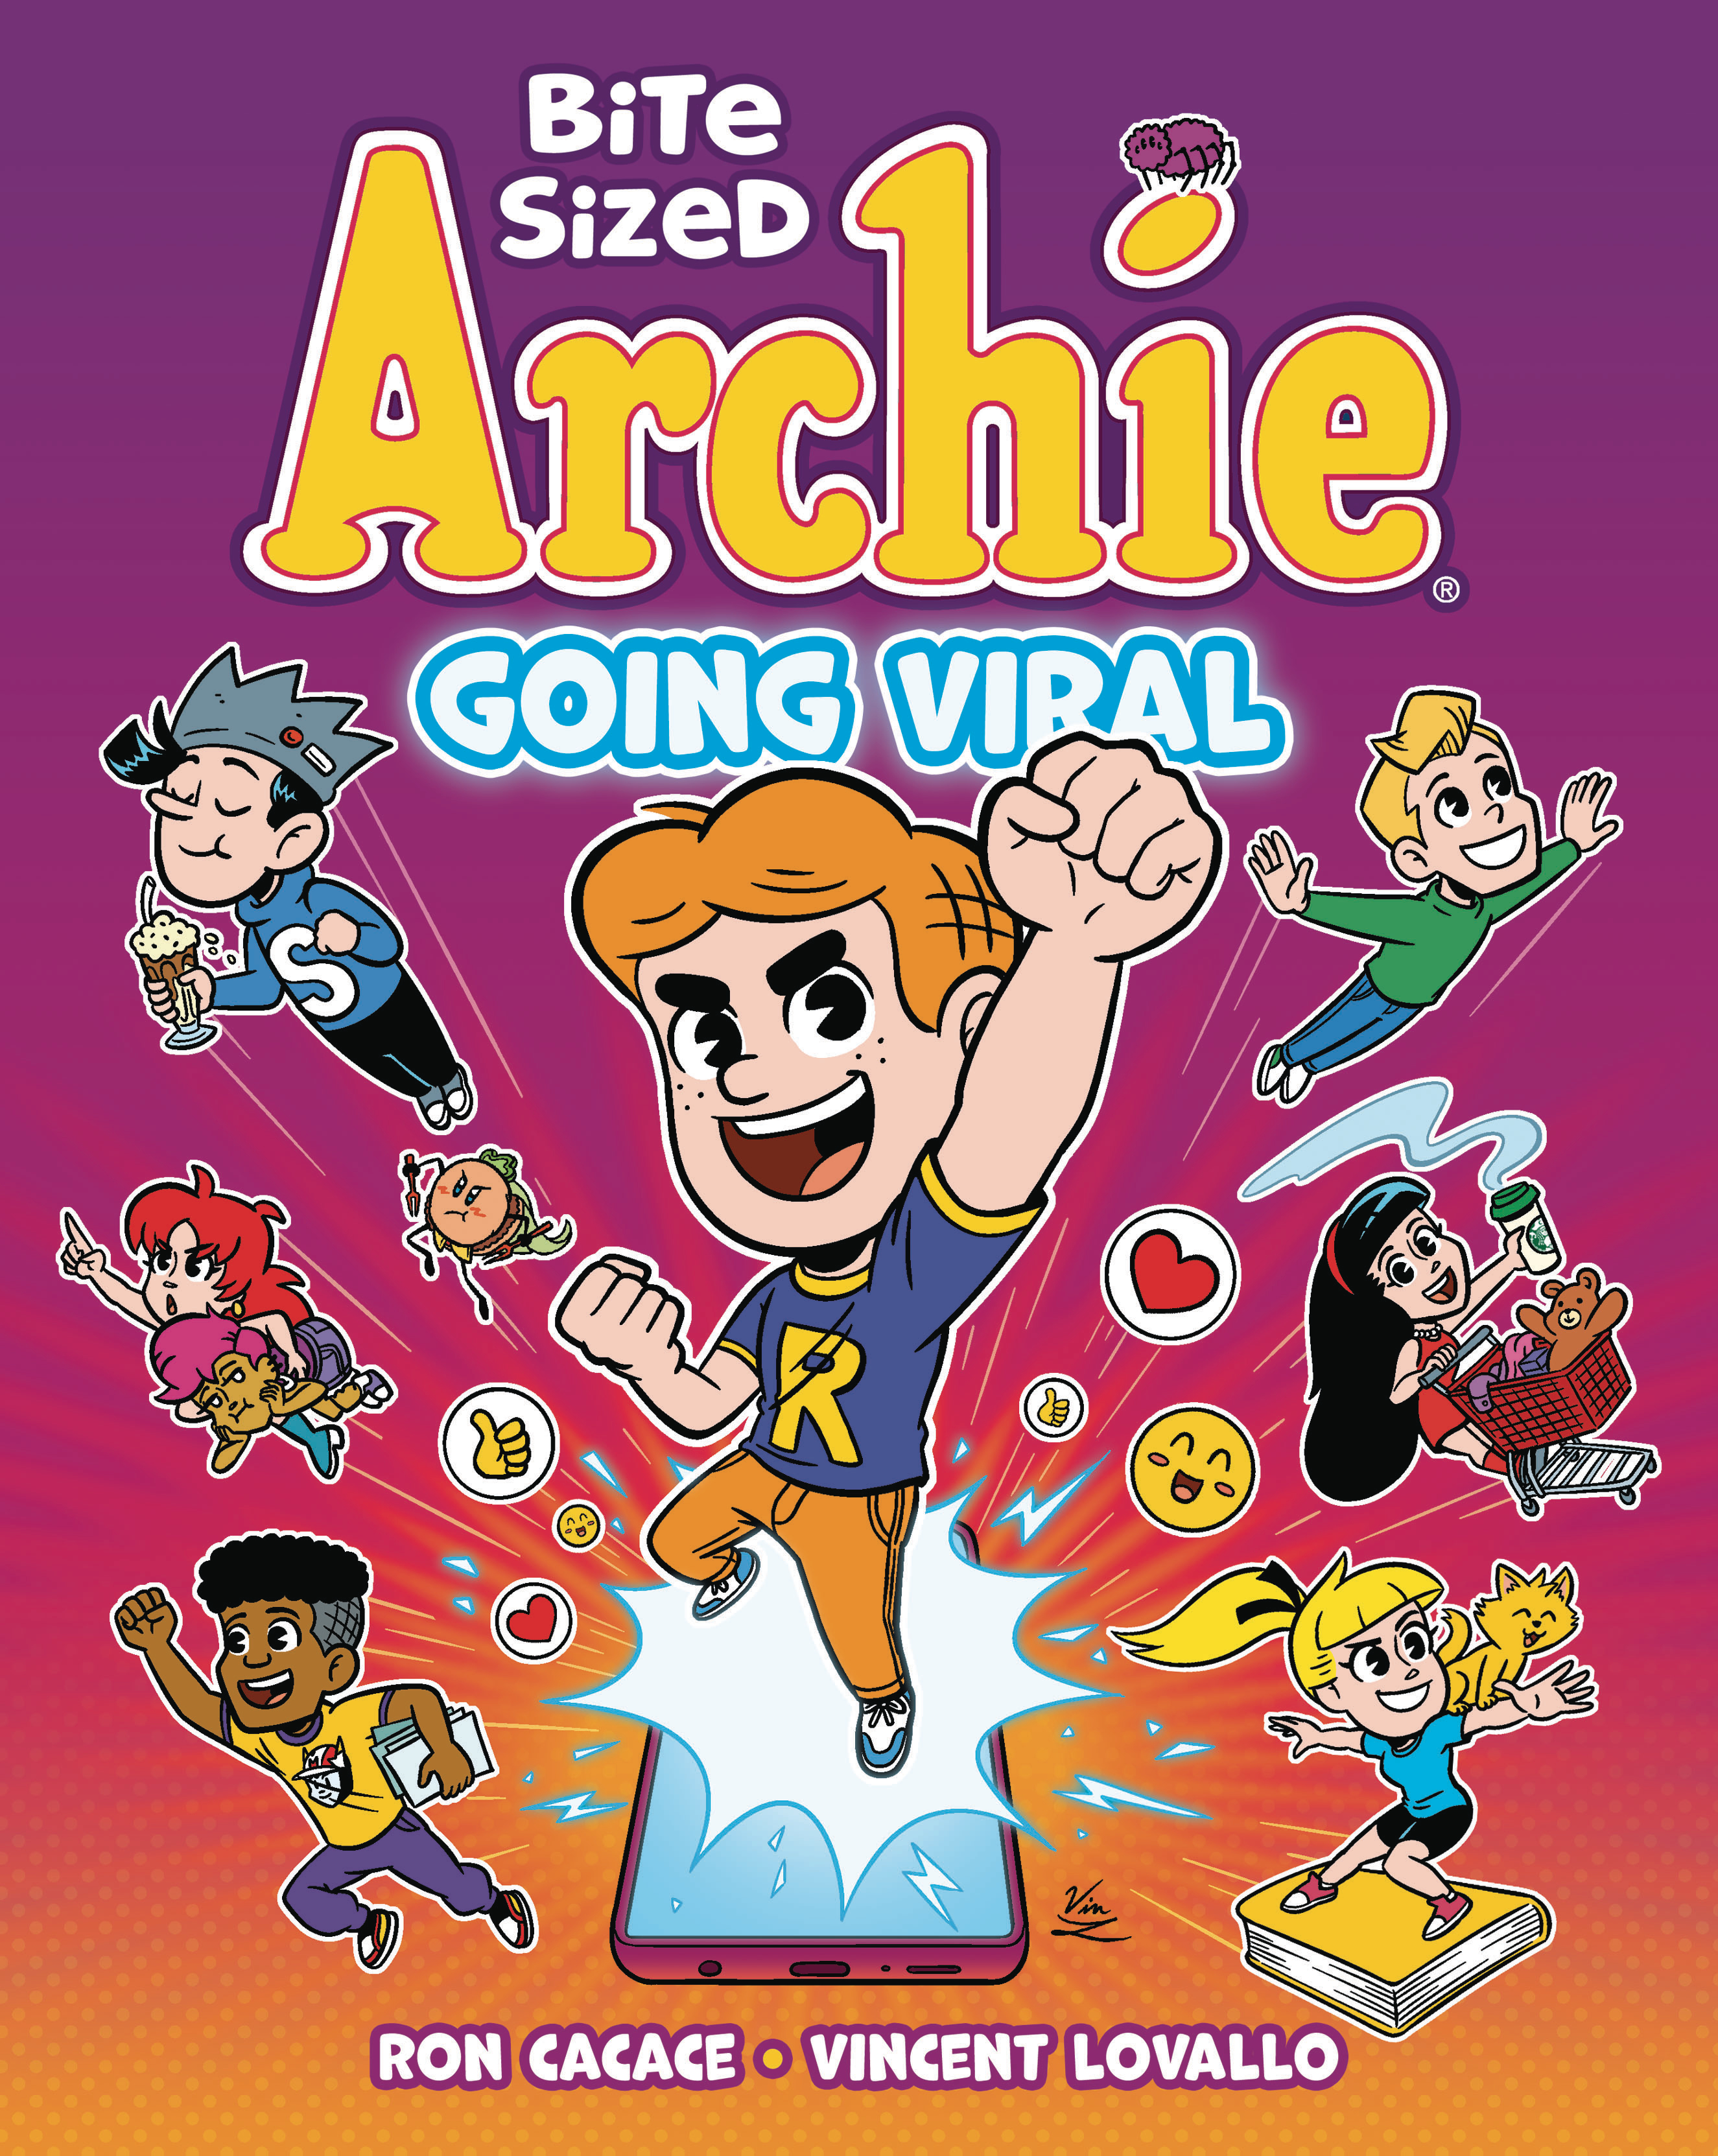 Bite Sized Archie Graphic Novel Volume 2